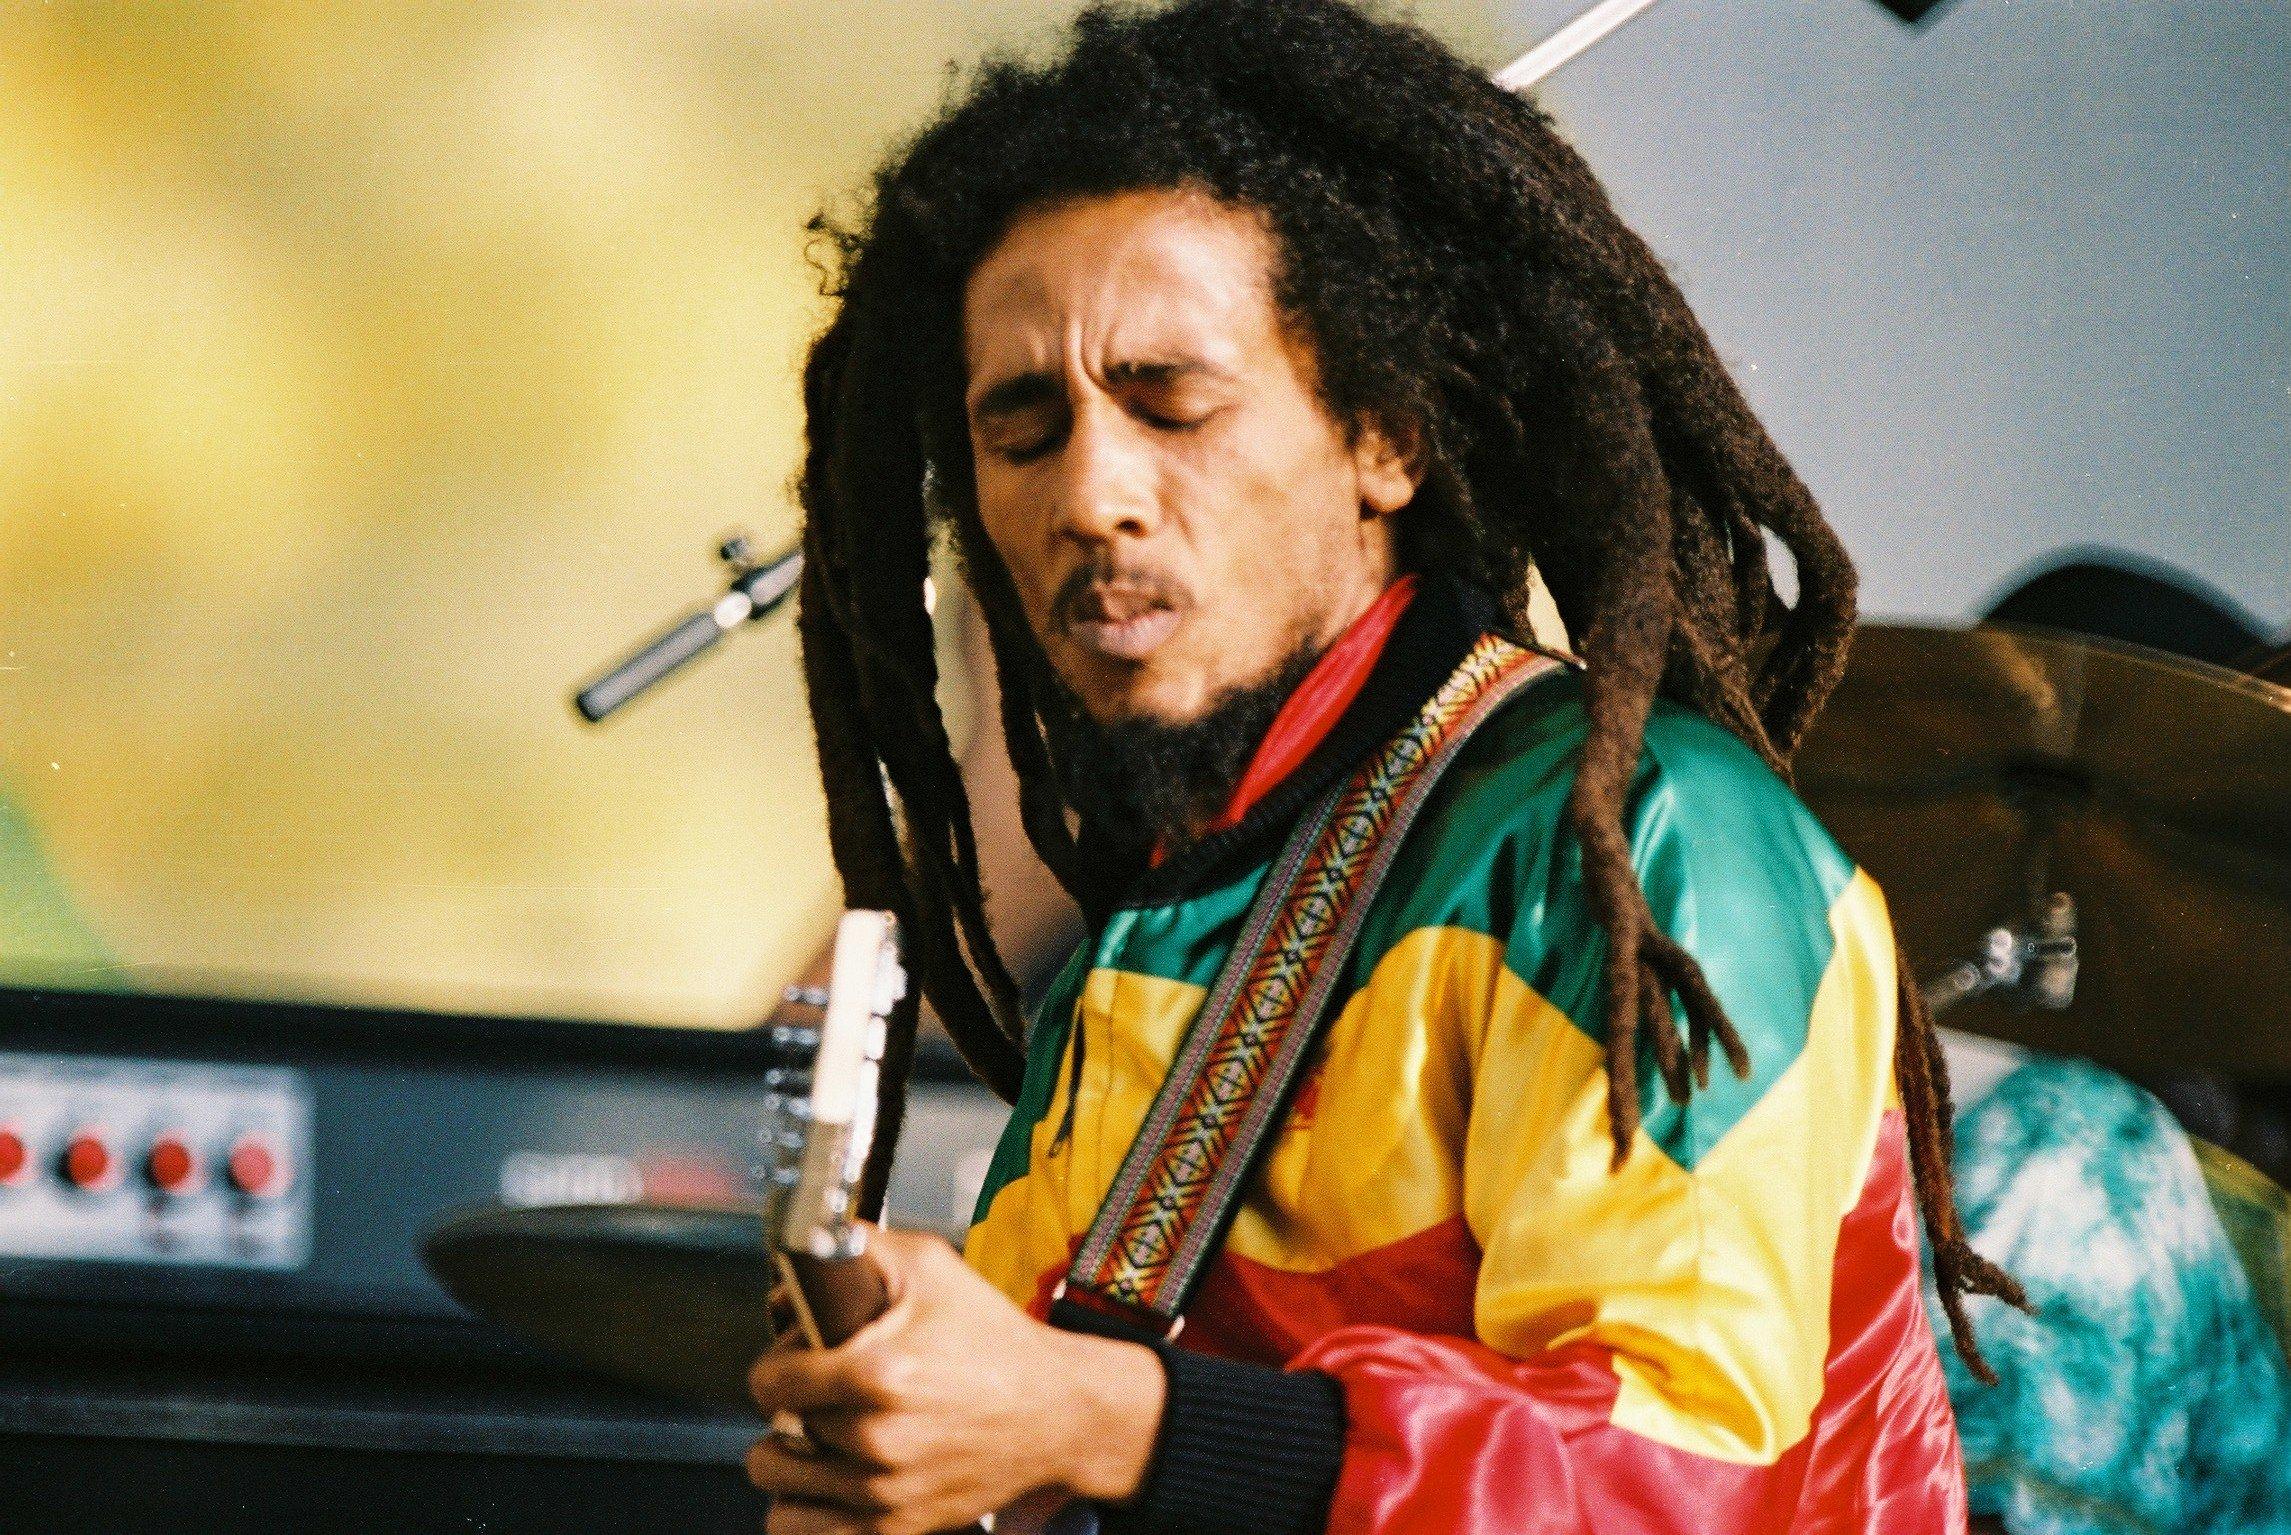 Bob Marley in London in 1980